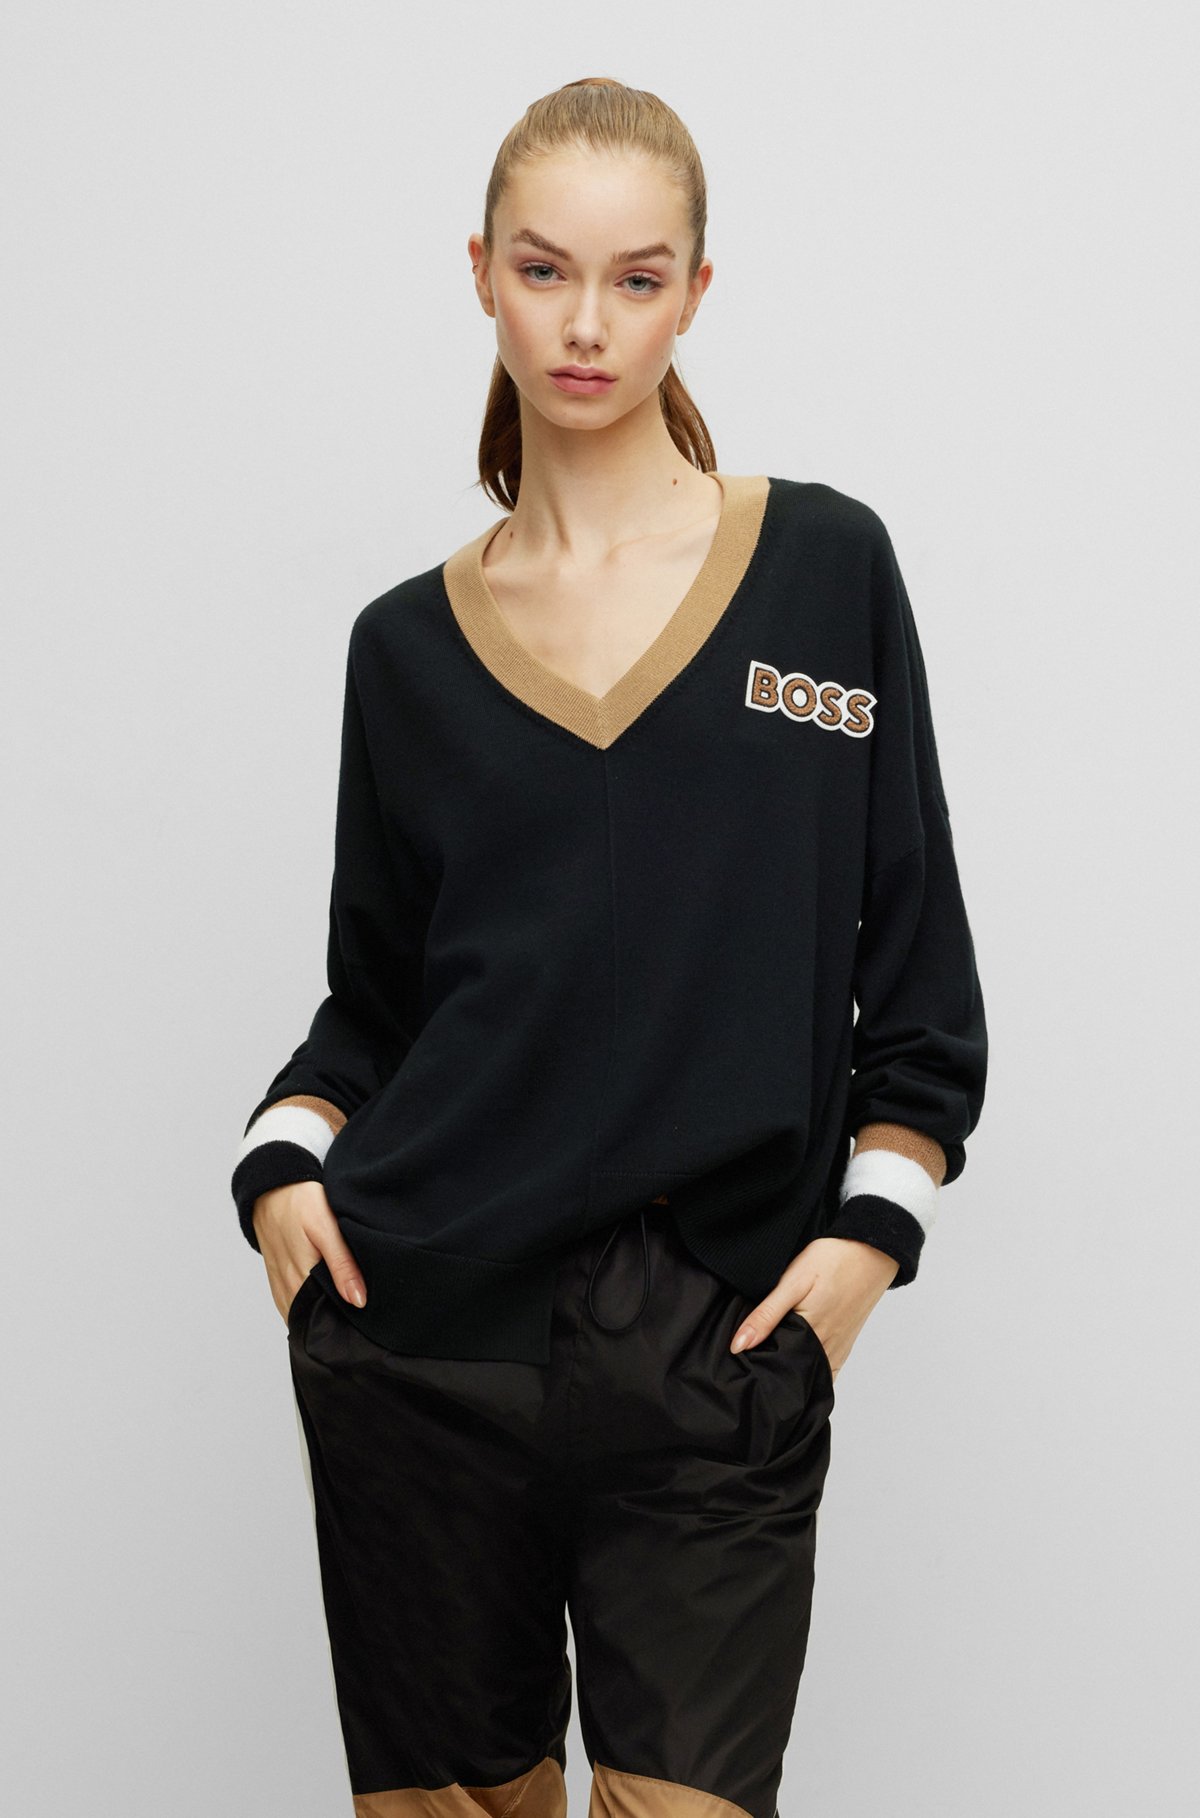 BOSS - BOSS x Alica Schmidt logo sweater in virgin wool with stepped hem